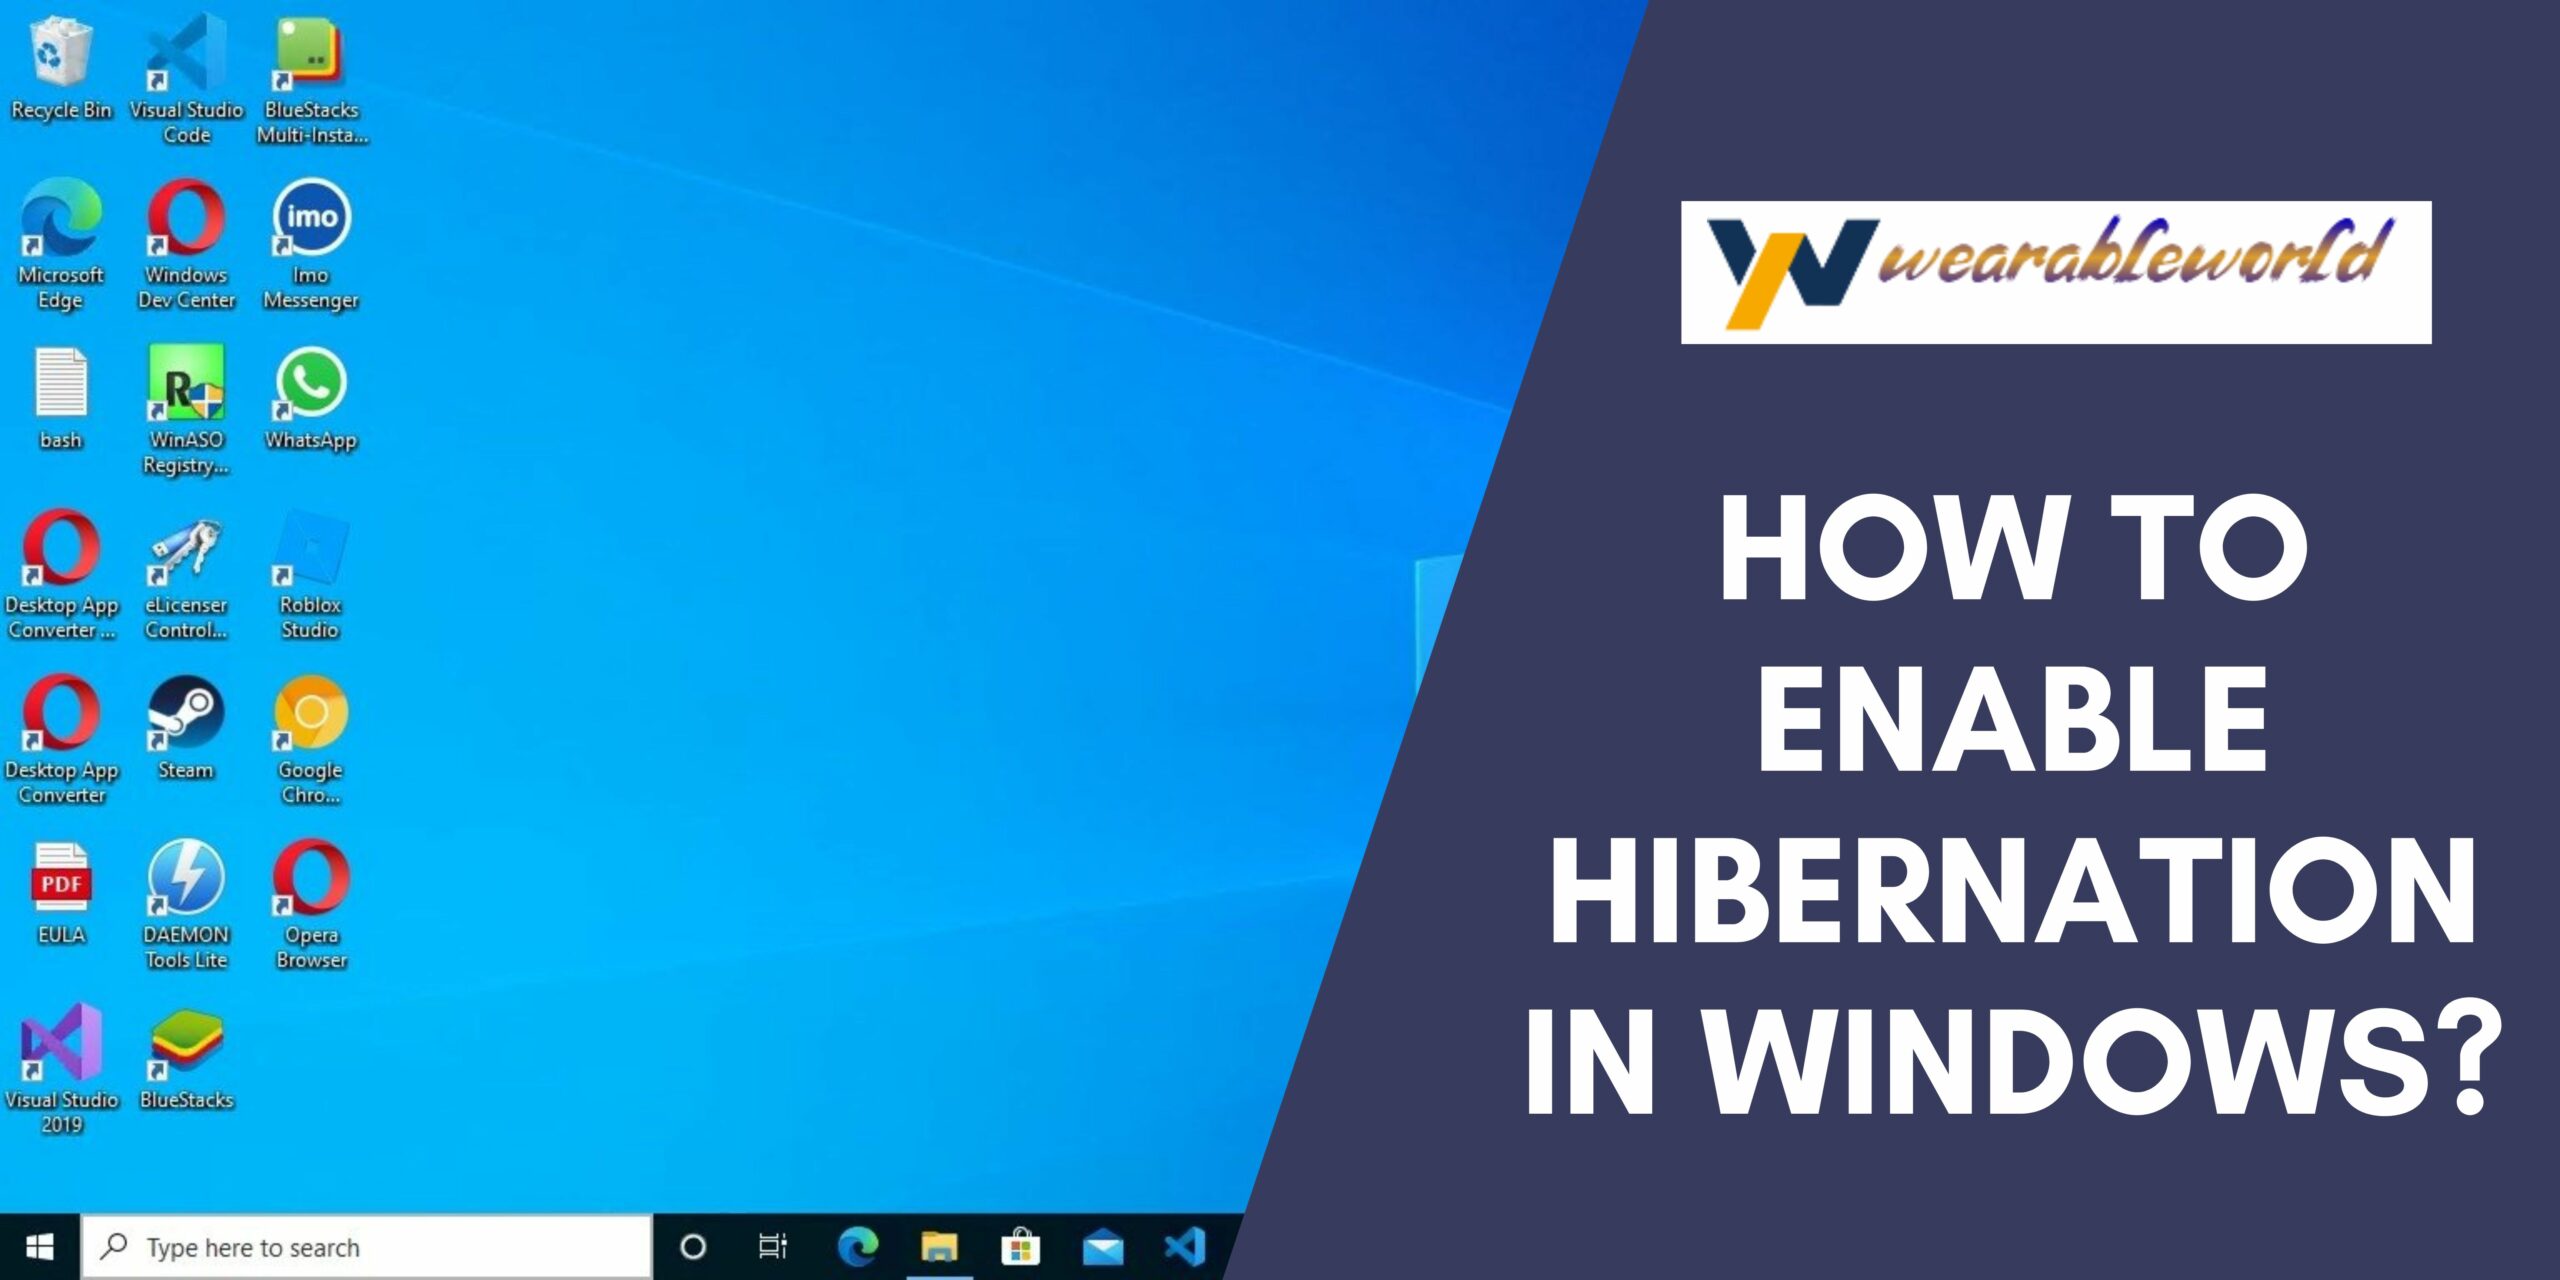 Enable Hibernation In Windows